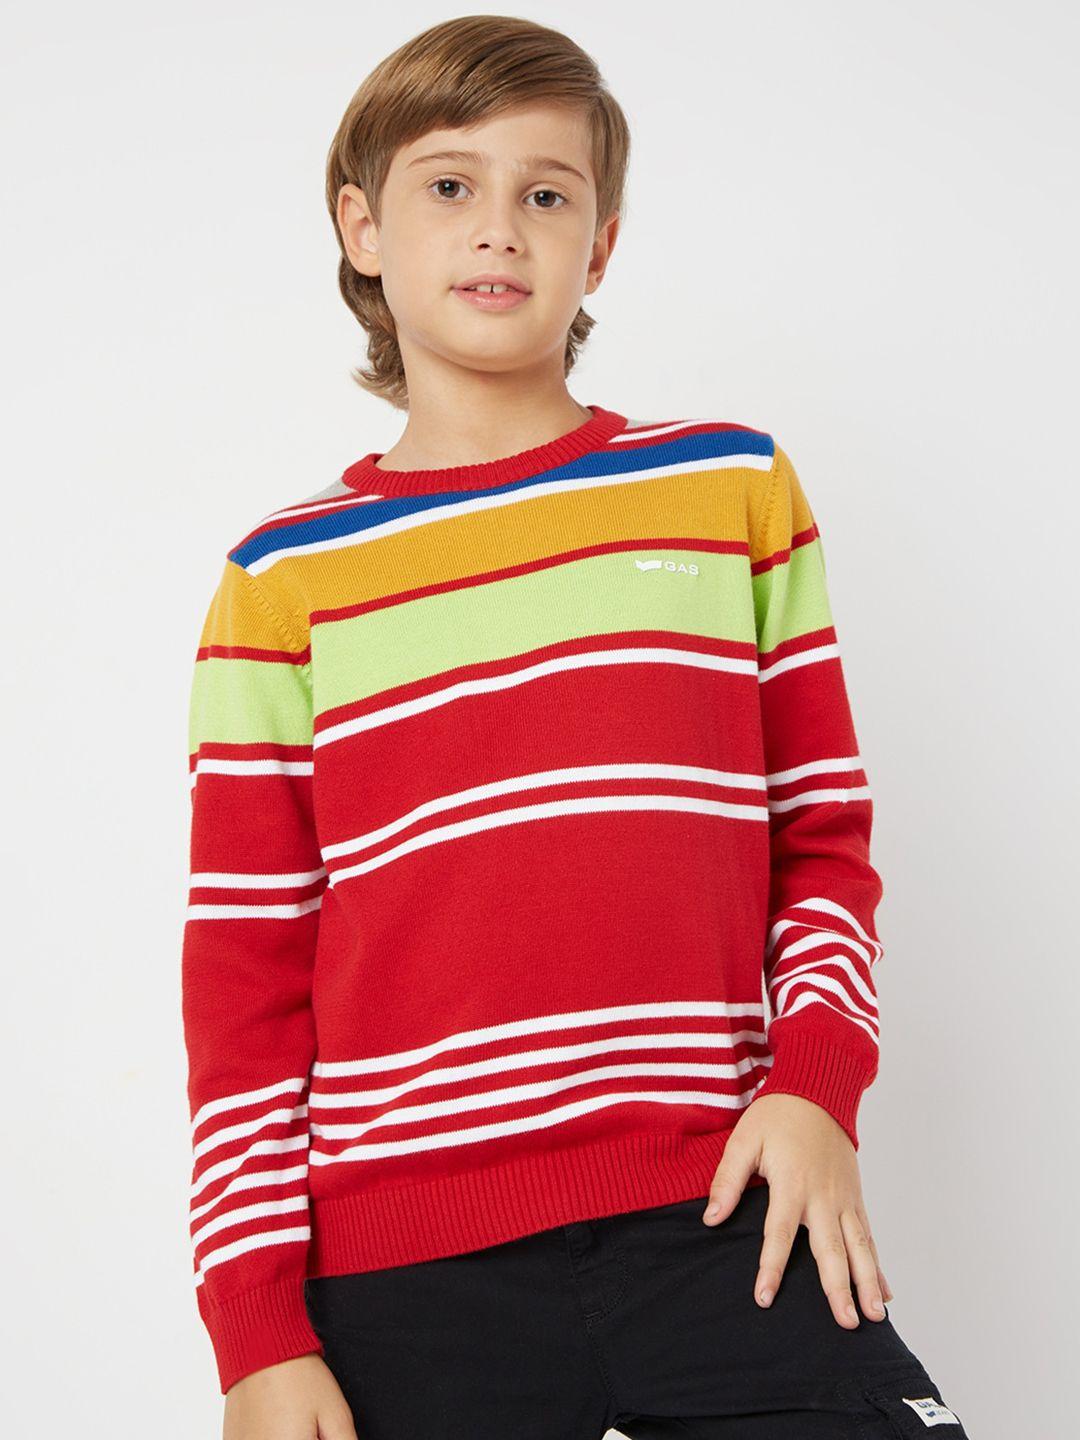 gas-boys-striped-cotton-pullover-sweater